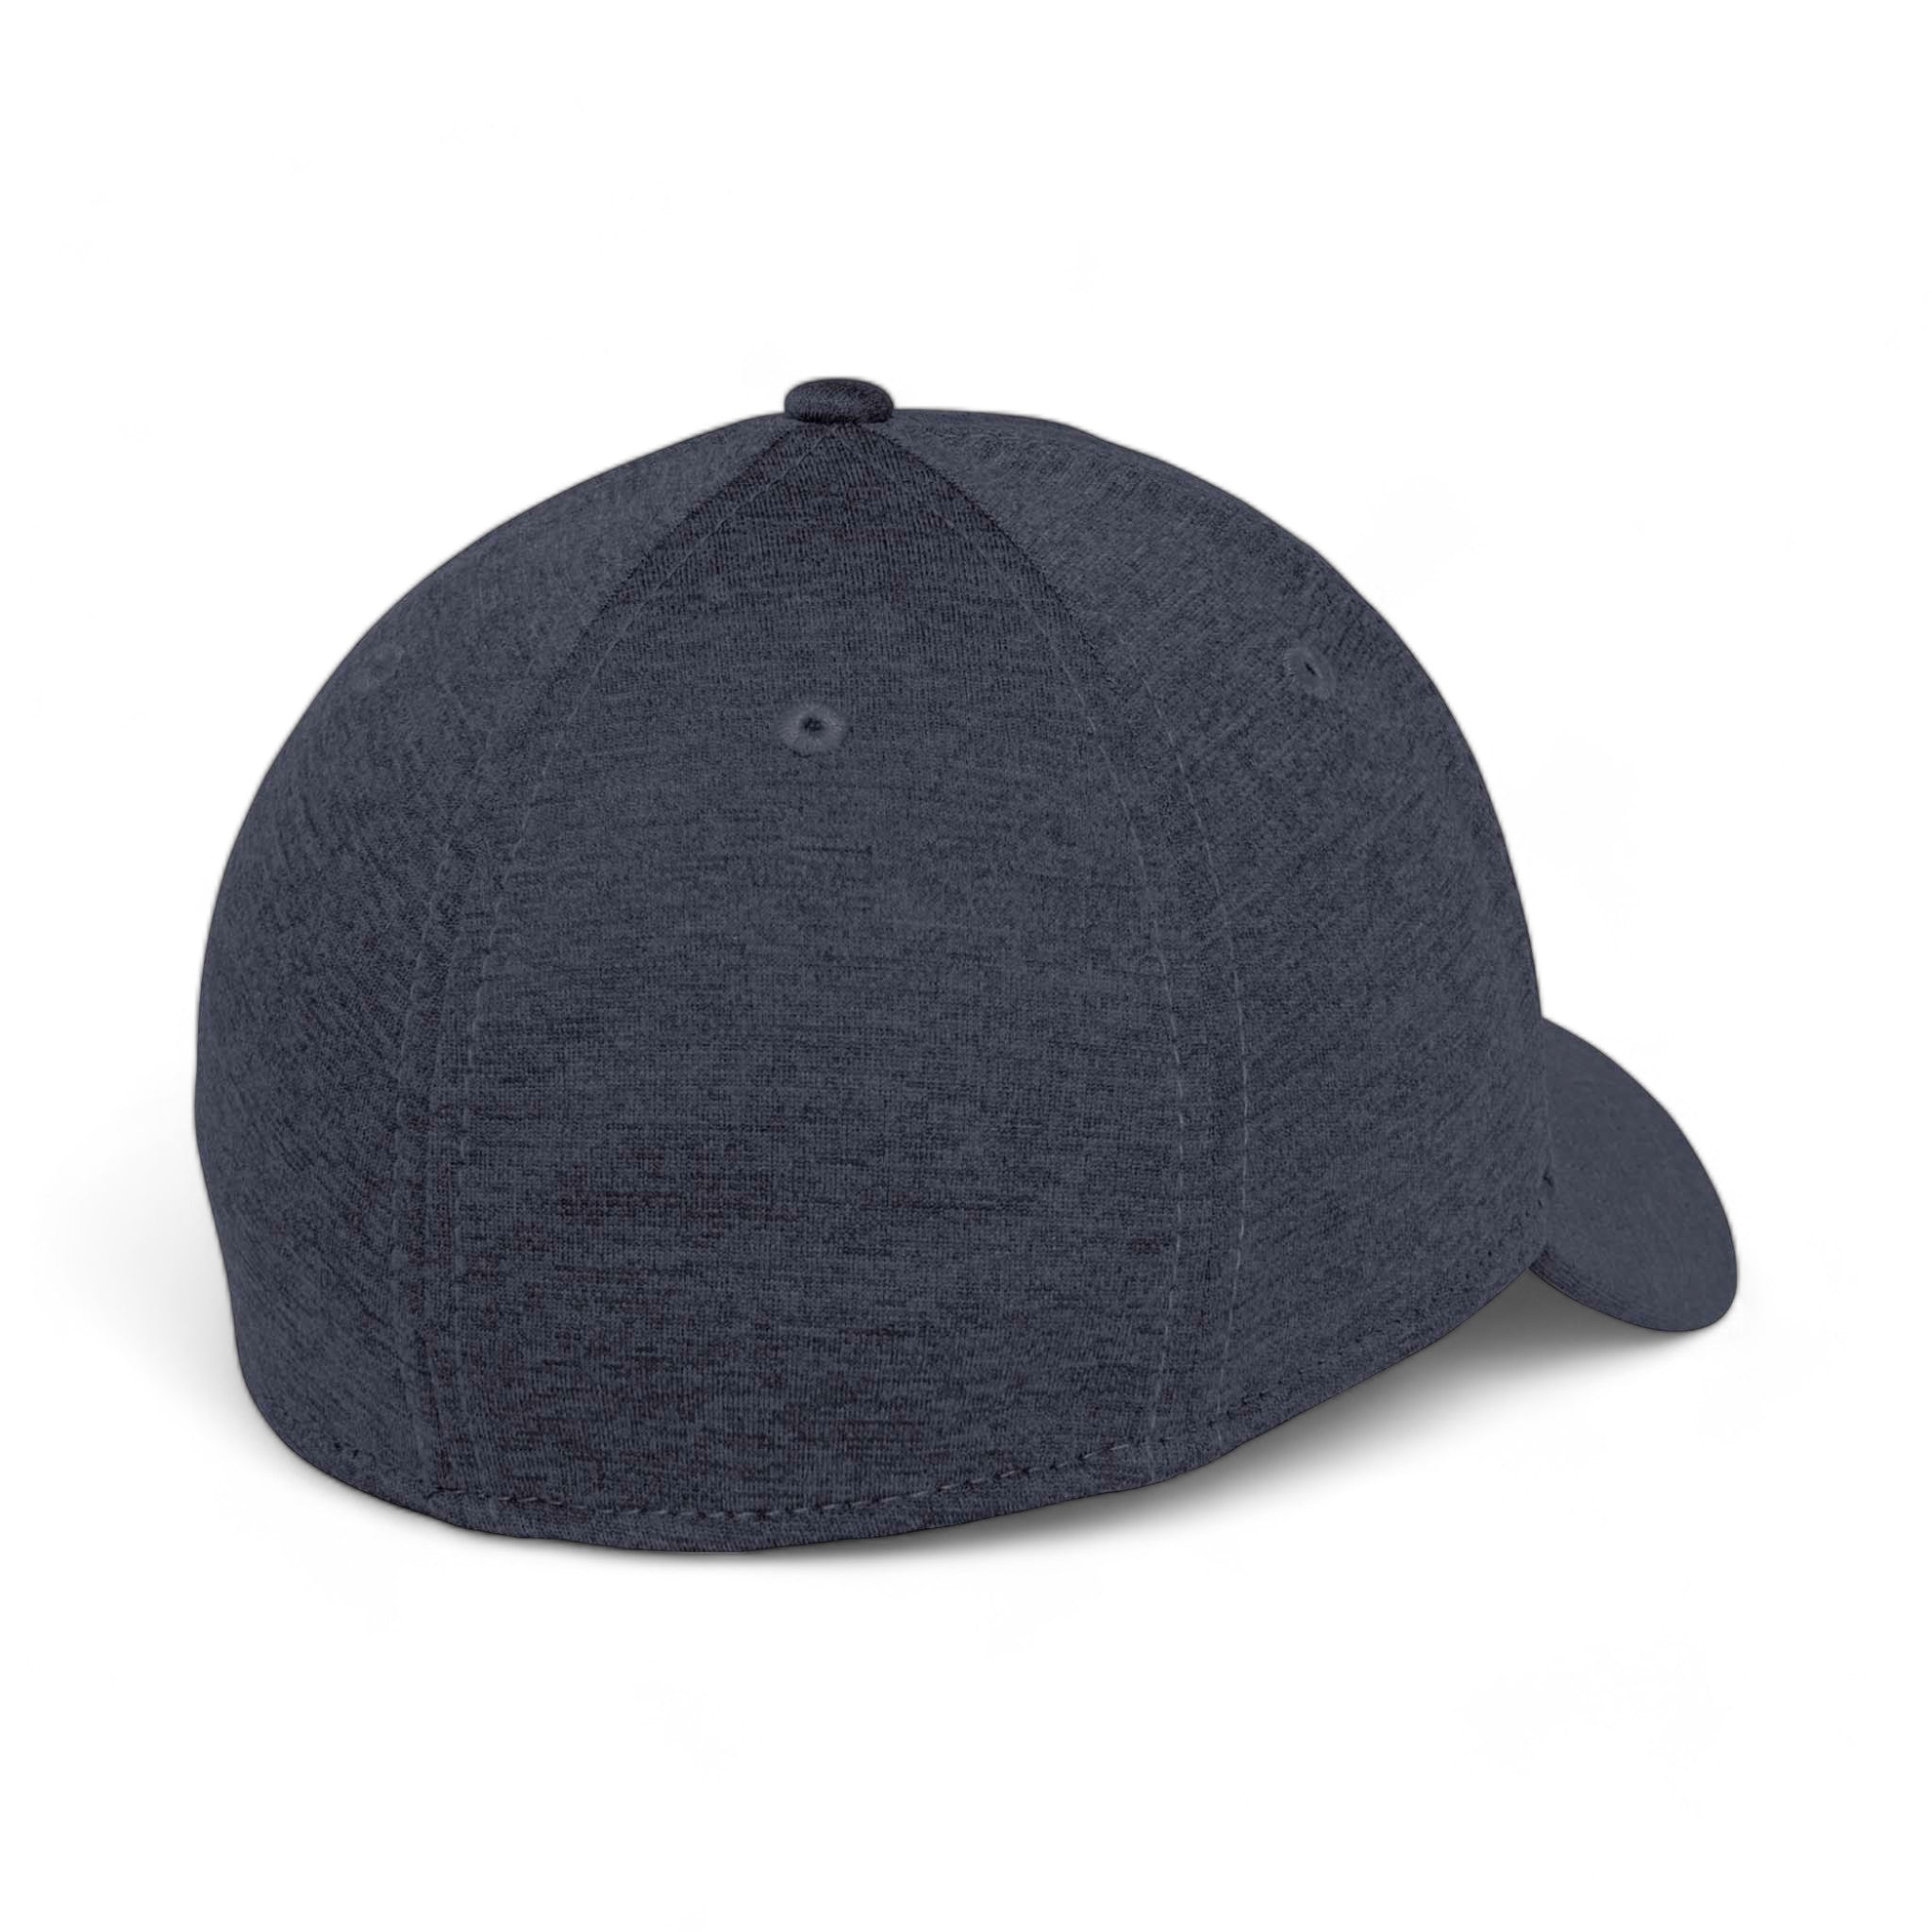 Back view of New Era NE703 custom hat in navy shadow heather